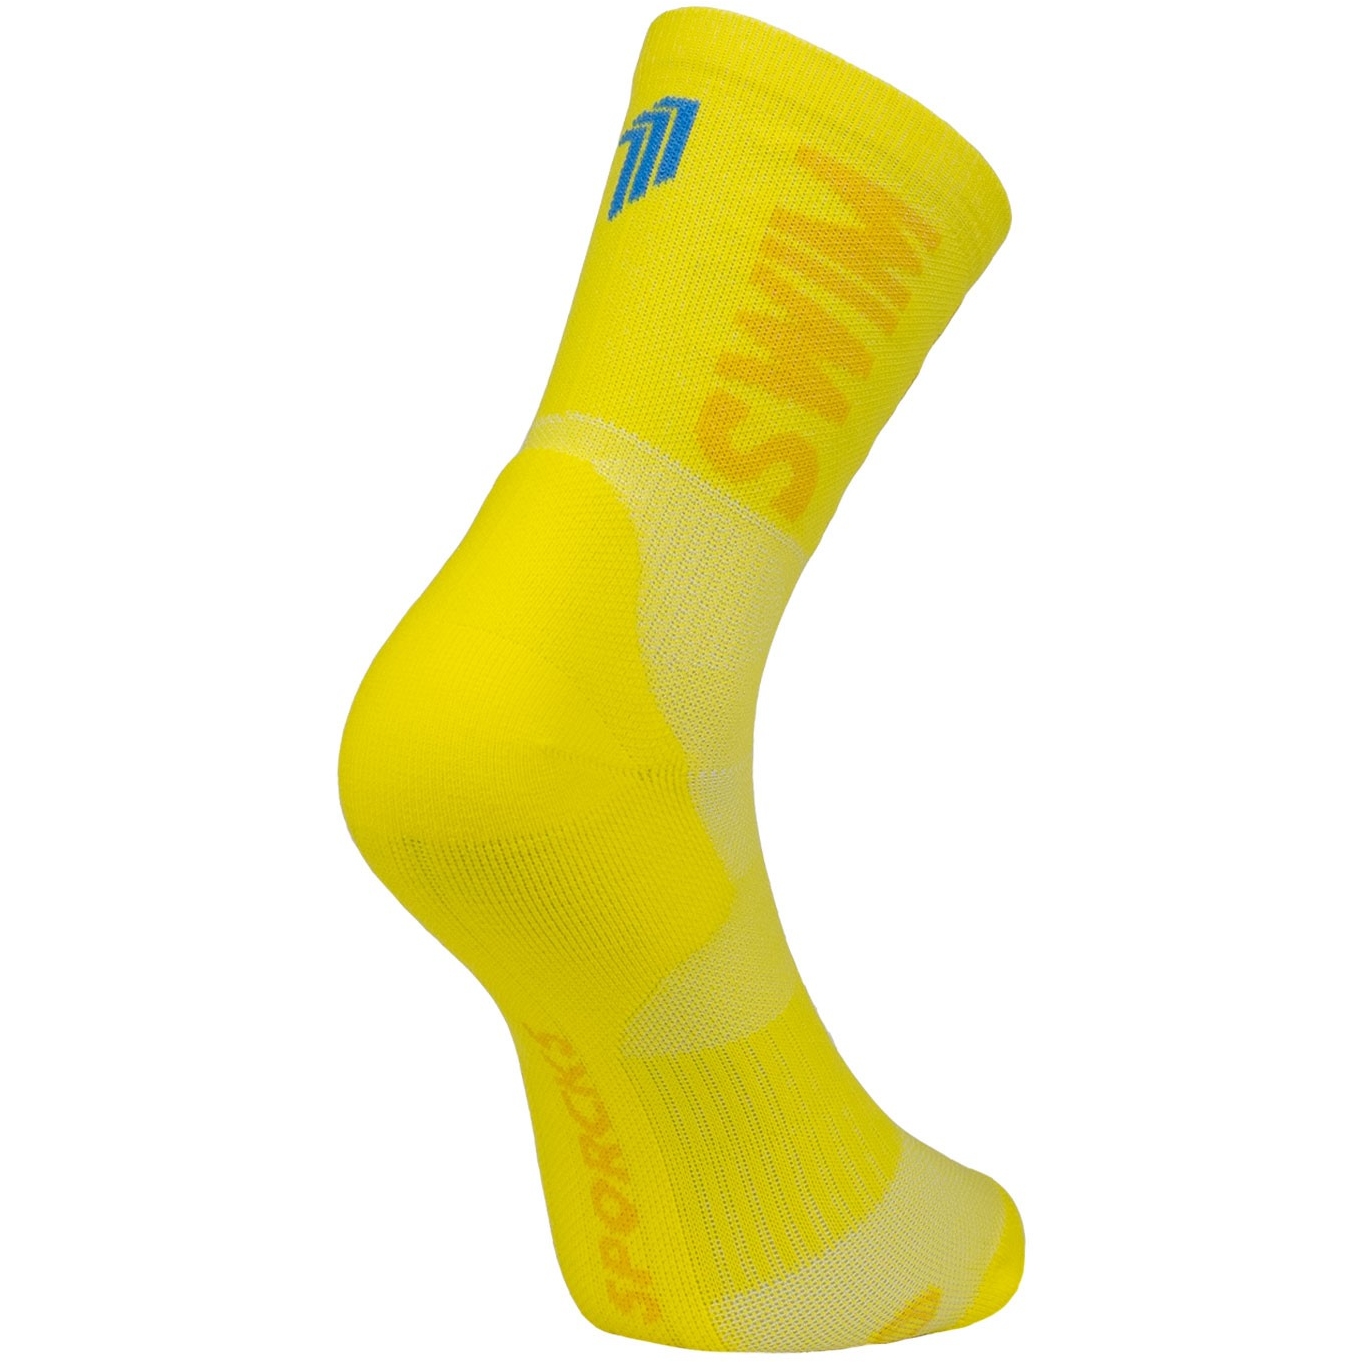 Productfoto van SPORCKS Triathlon Socks - SBR Yellow